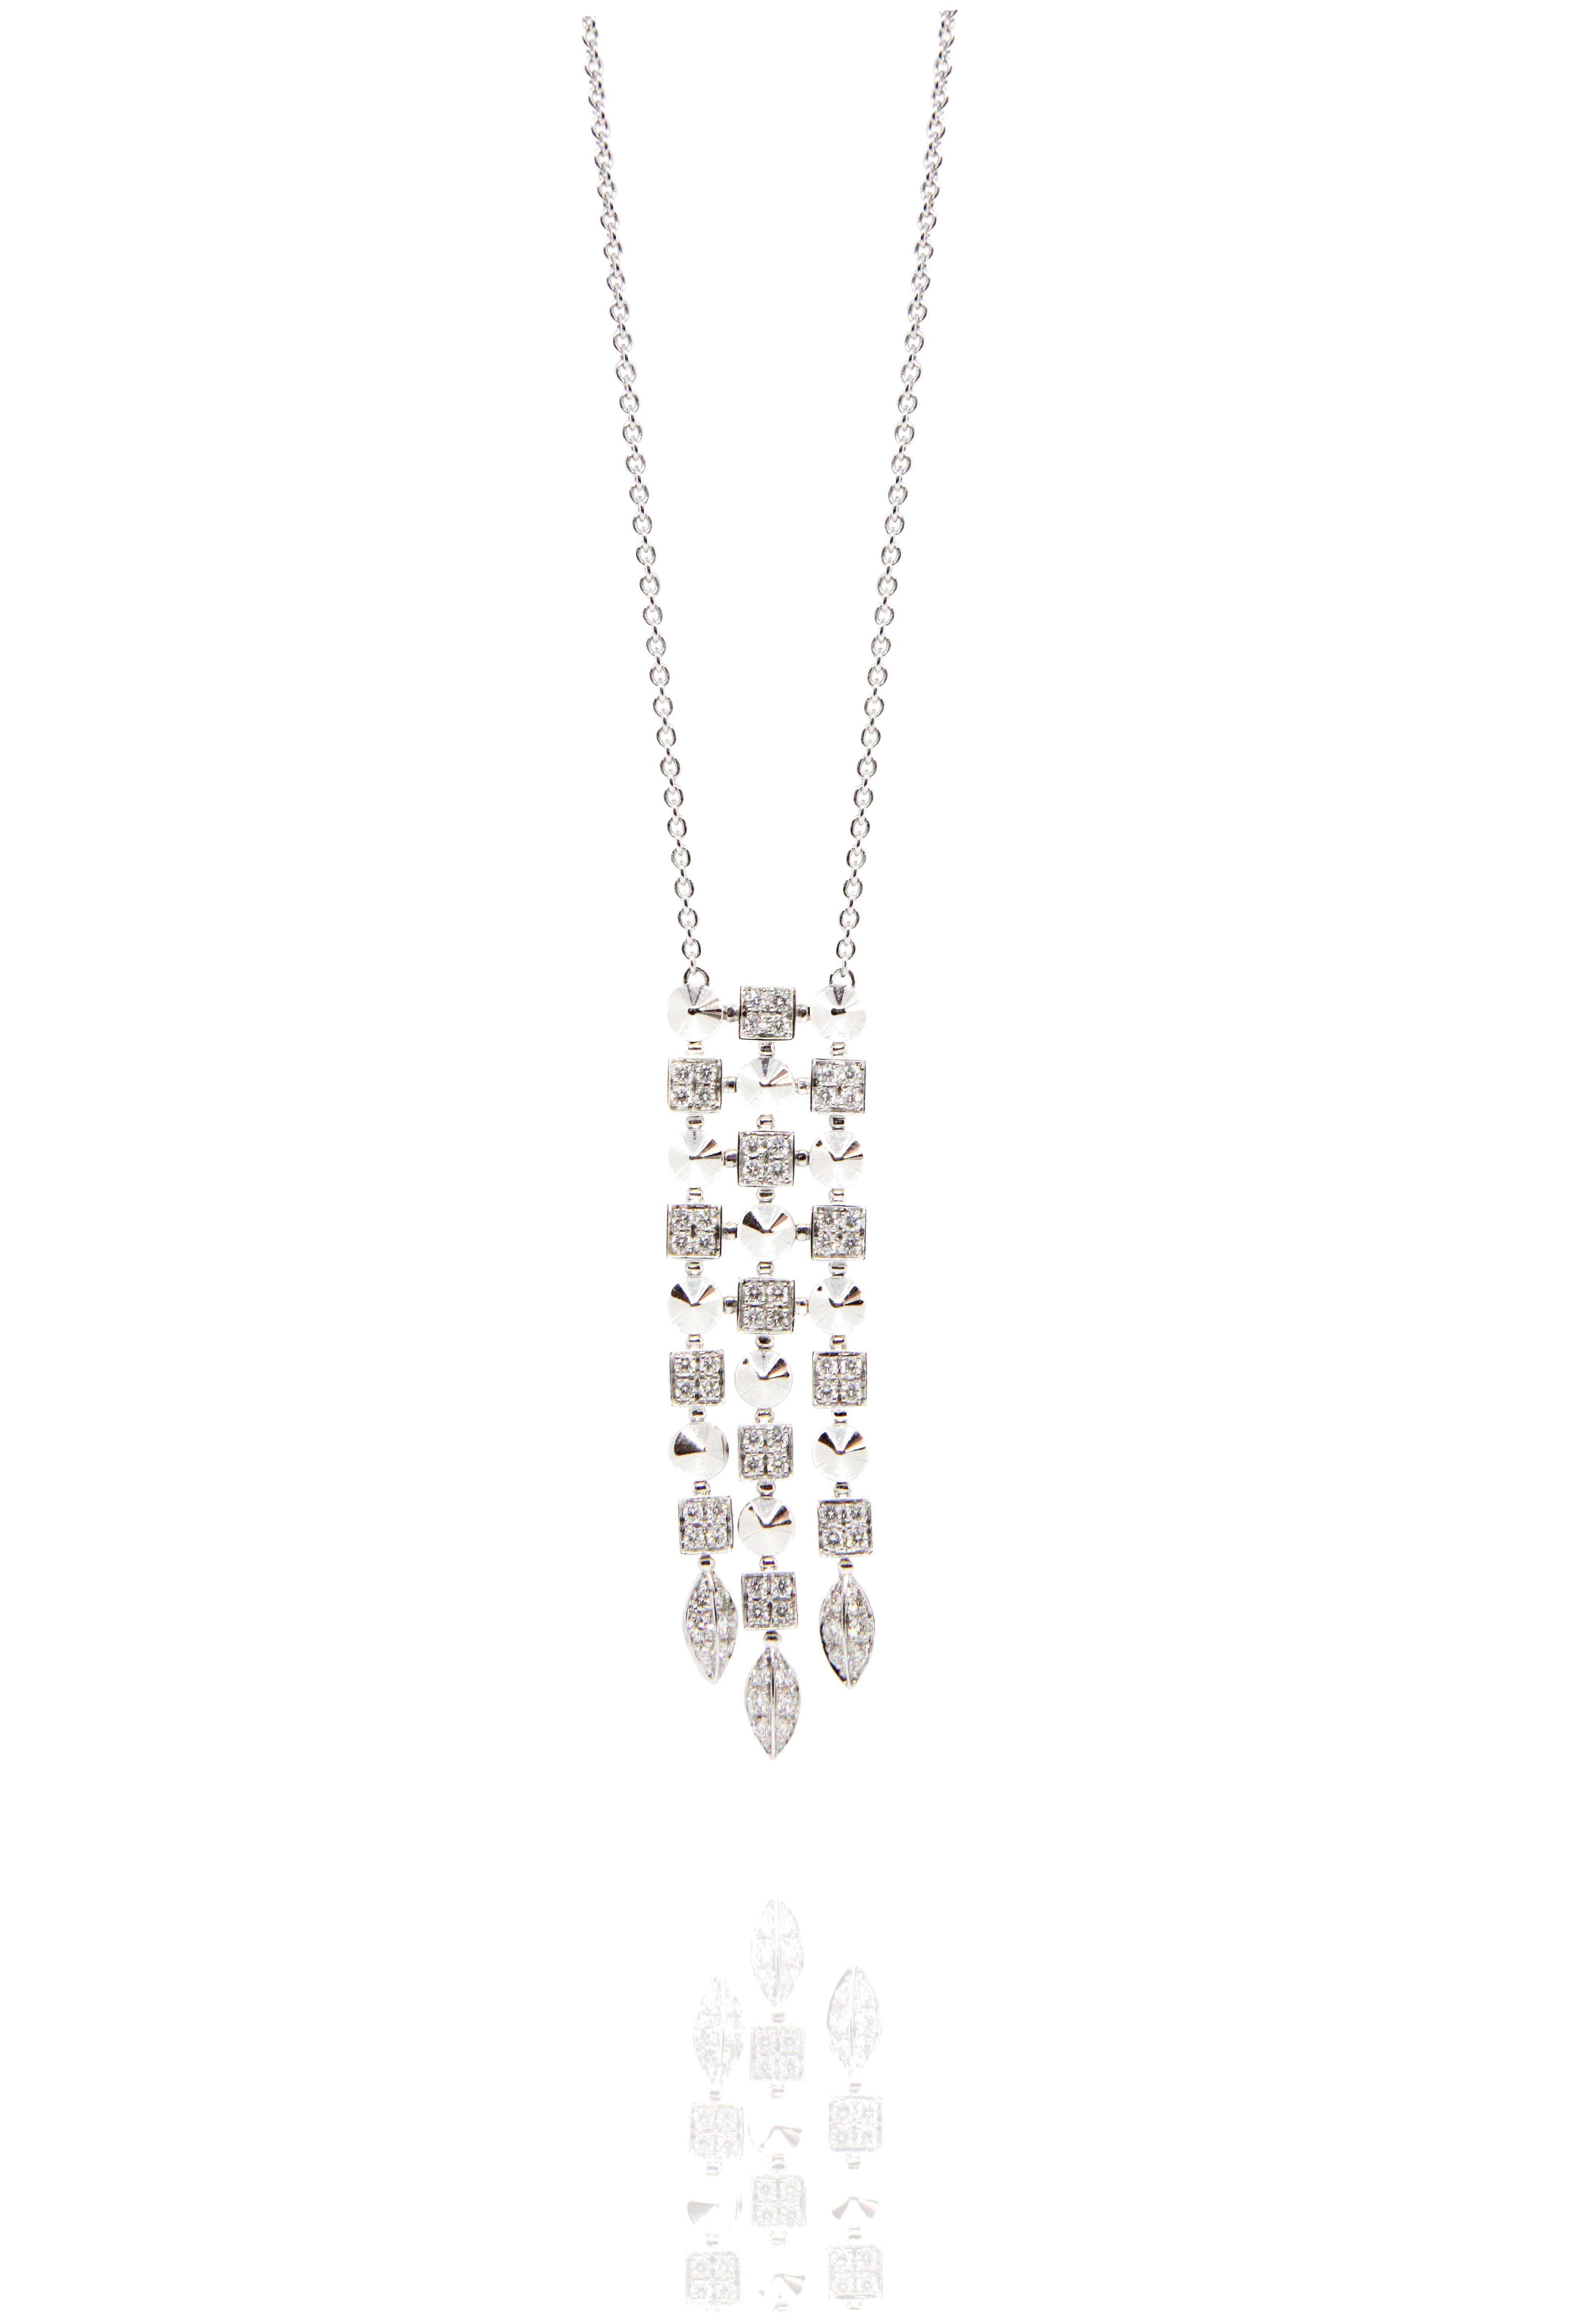 Brilliant Cut Stunning Bvlgari 18 Karat White Gold Diamond Pendant Chain Necklace For Sale